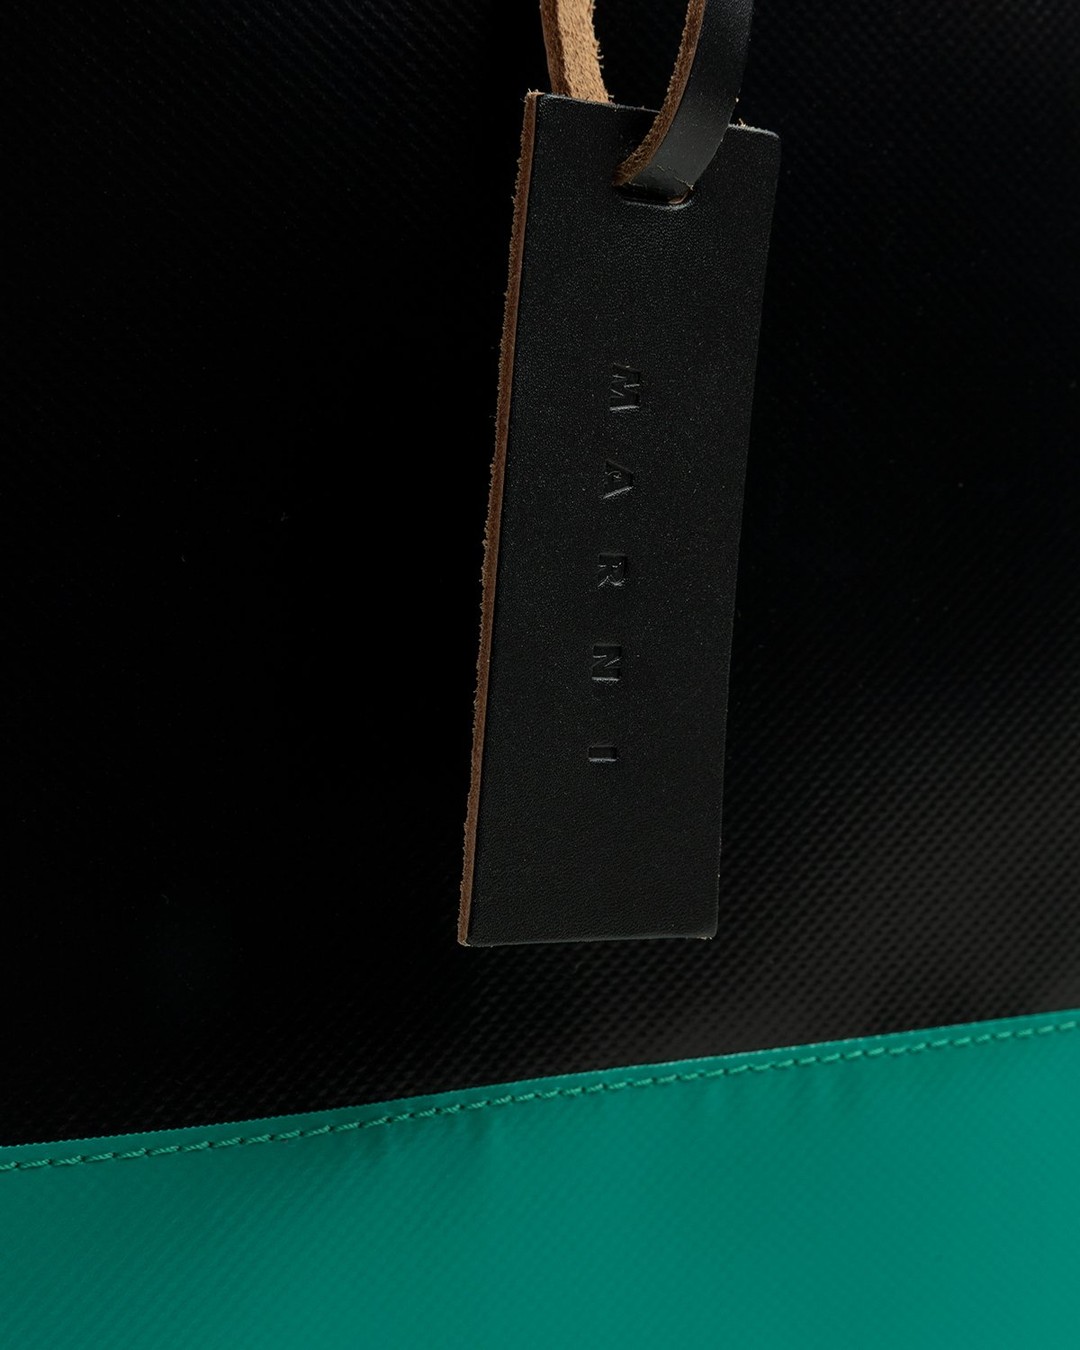 Marni – Tribeca Two-Tone Tote Bag Black/Green - Bags - Black - Image 4